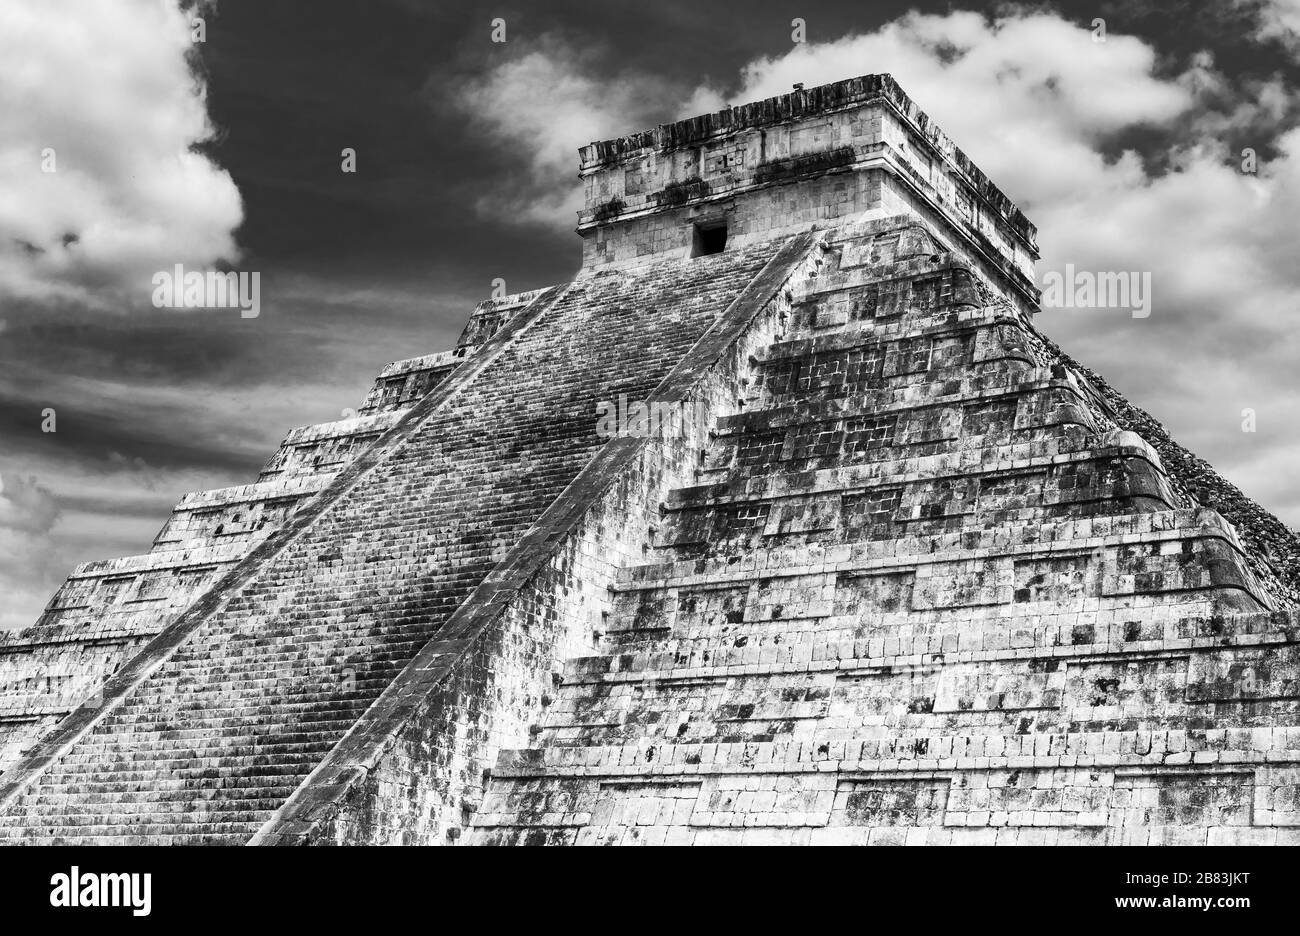 La pyramide maya de Kukulkan ou El Castillo en noir et blanc près de Merida et Cancun, péninsule du Yucatan, Mexique. Banque D'Images